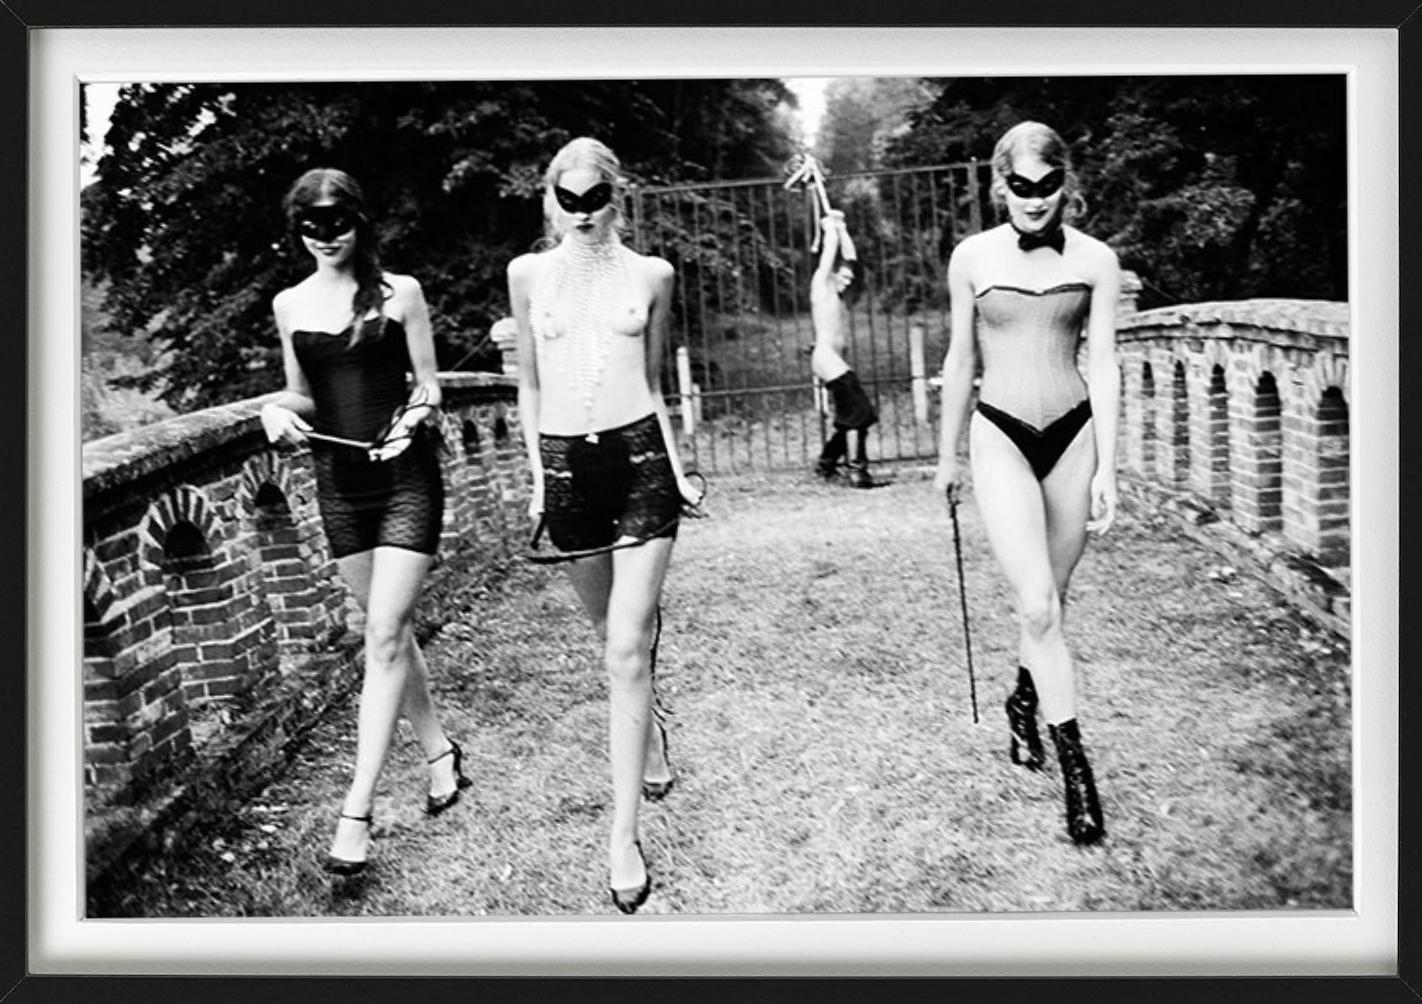 'Punishment' - seminude with masks outdoors, fine art photography, 2002 - Photograph by Ellen von Unwerth